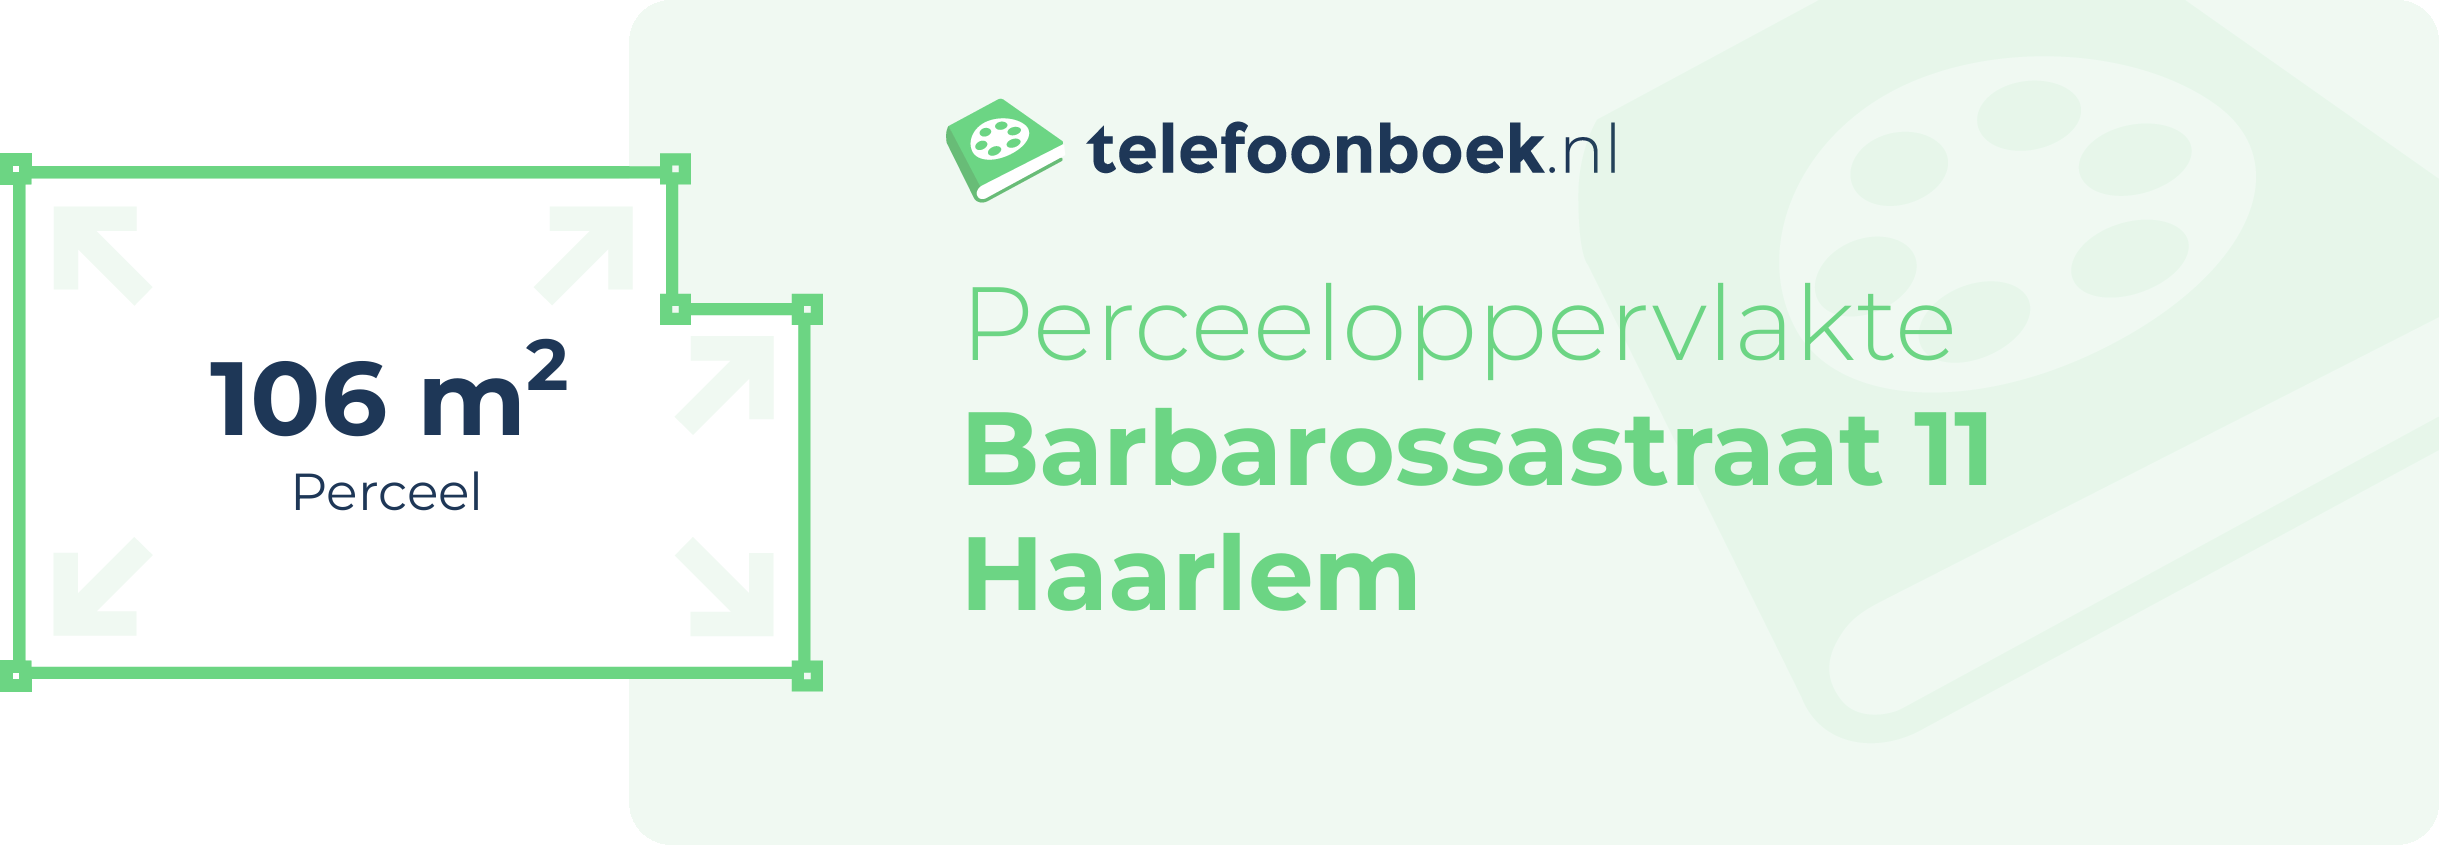 Perceeloppervlakte Barbarossastraat 11 Haarlem